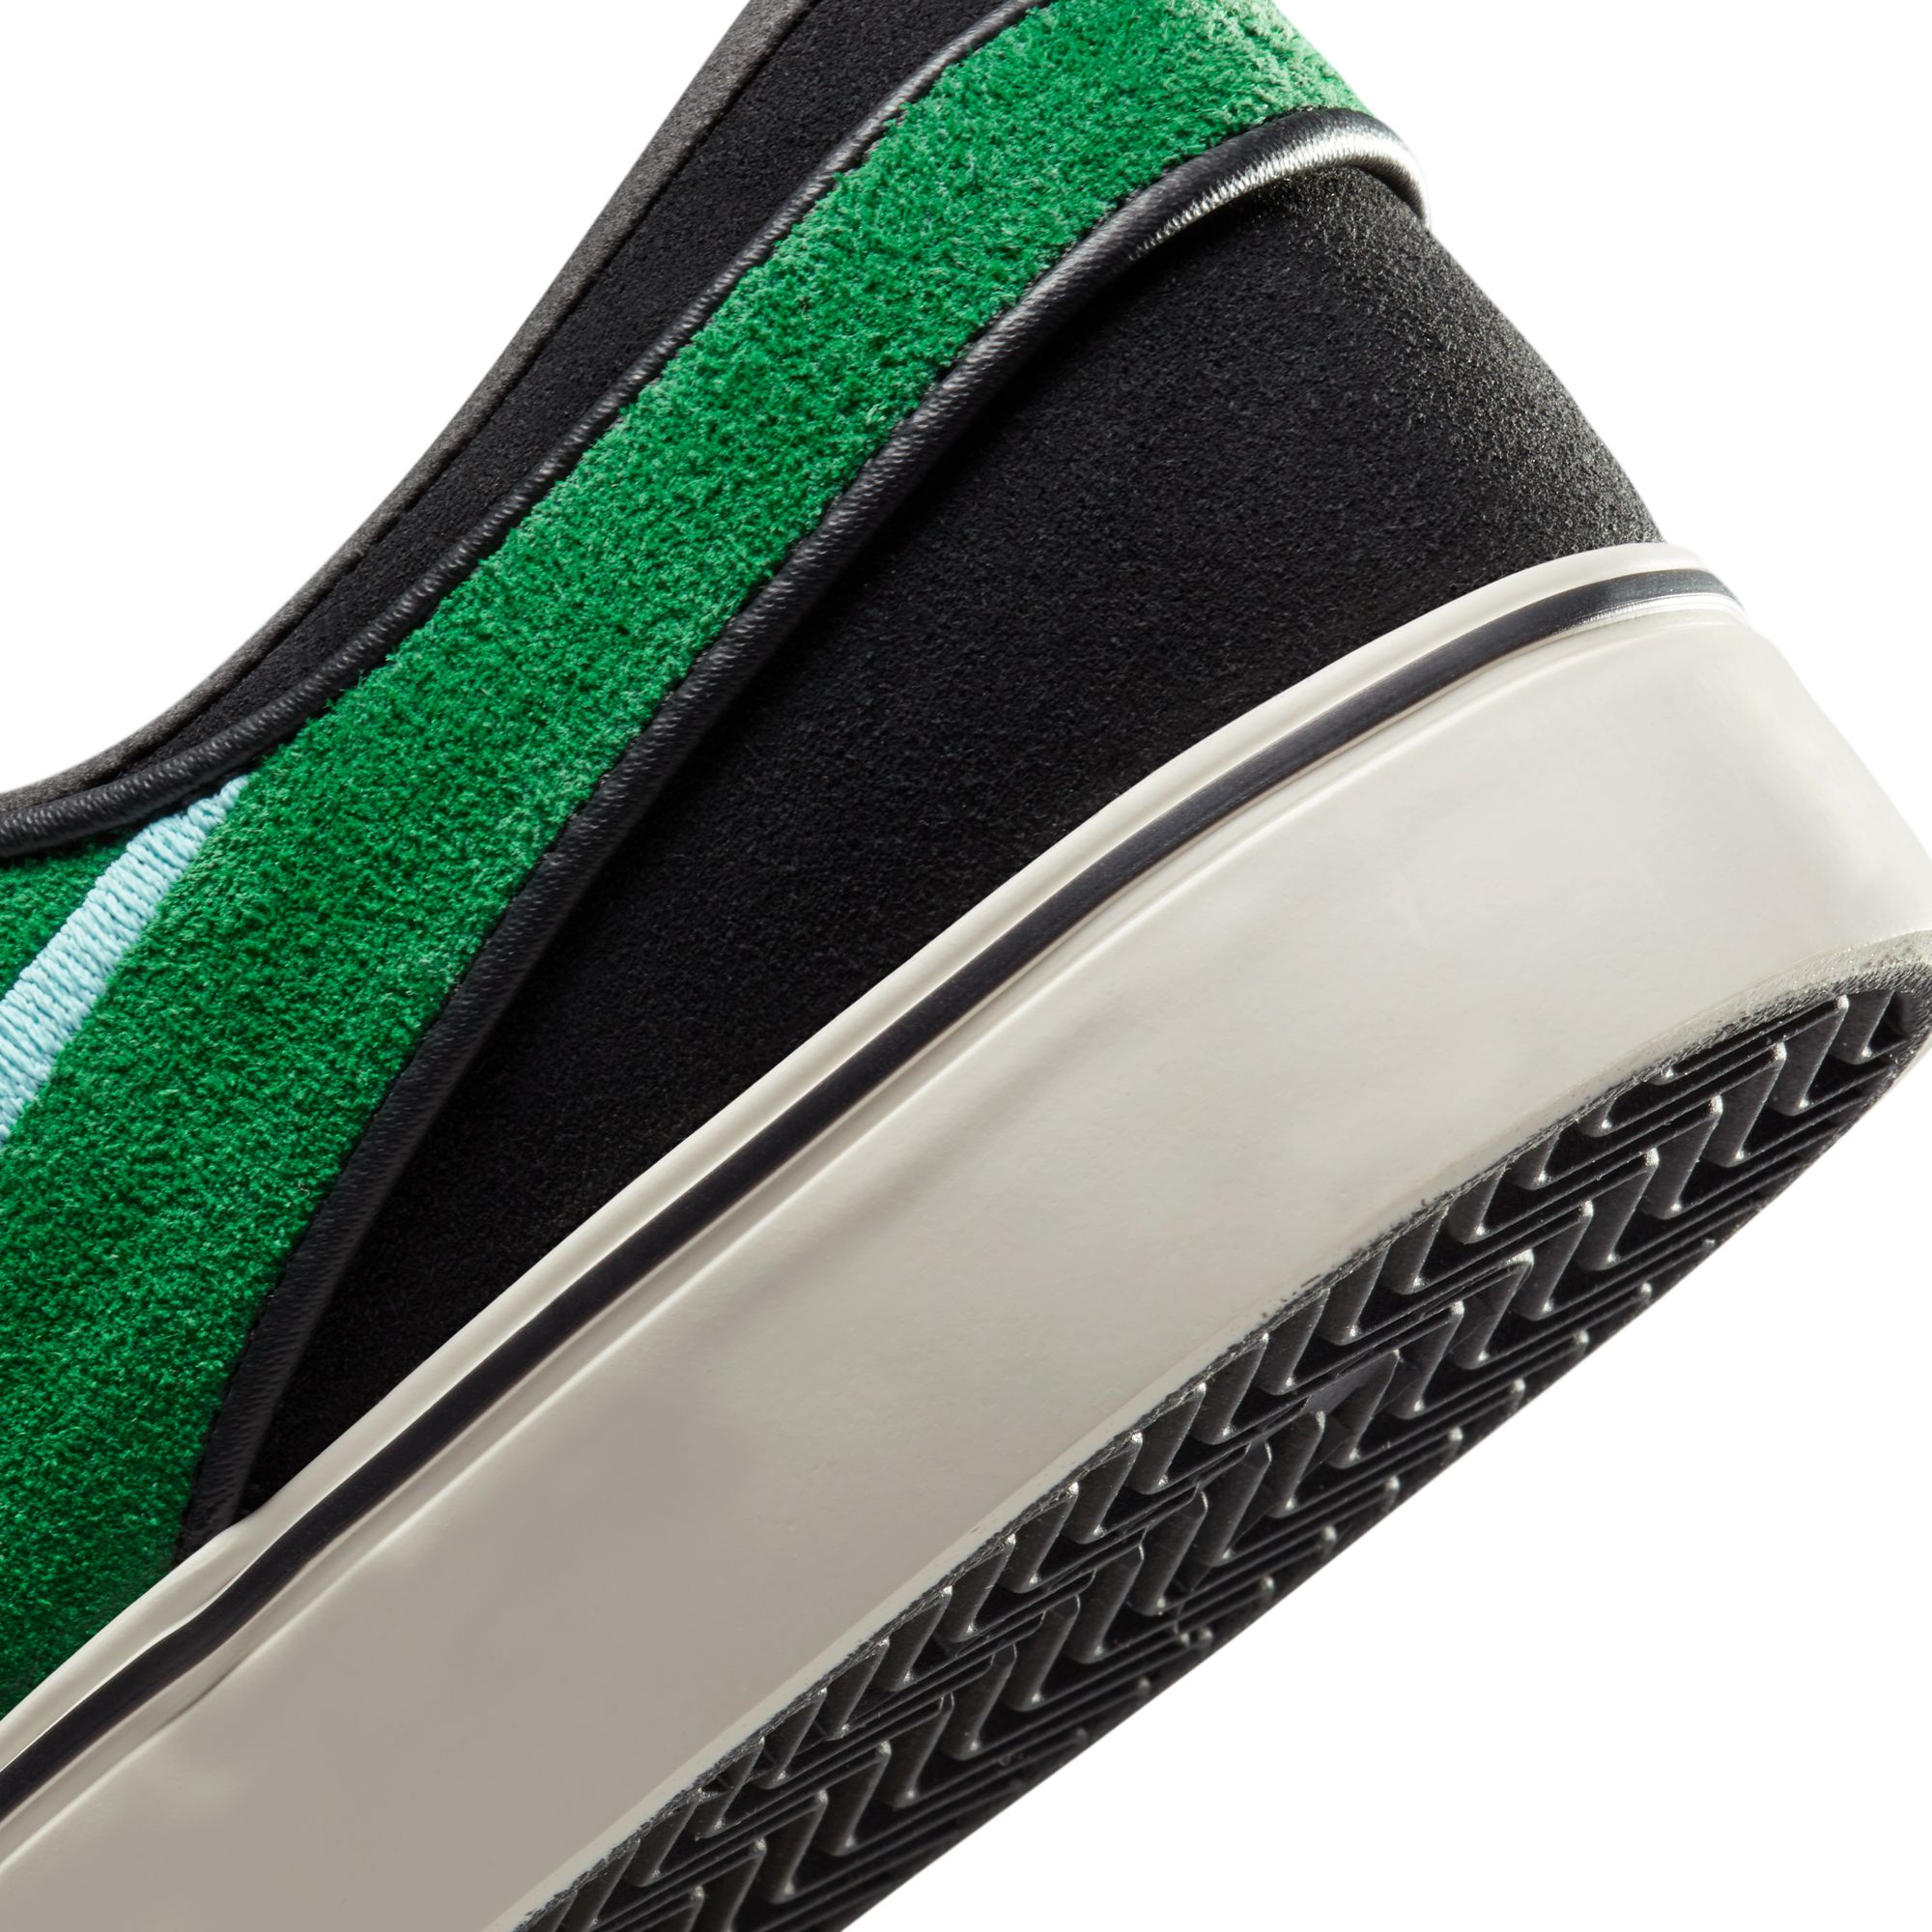 Nike SB Zoom Janoski OG+ Gorge Green